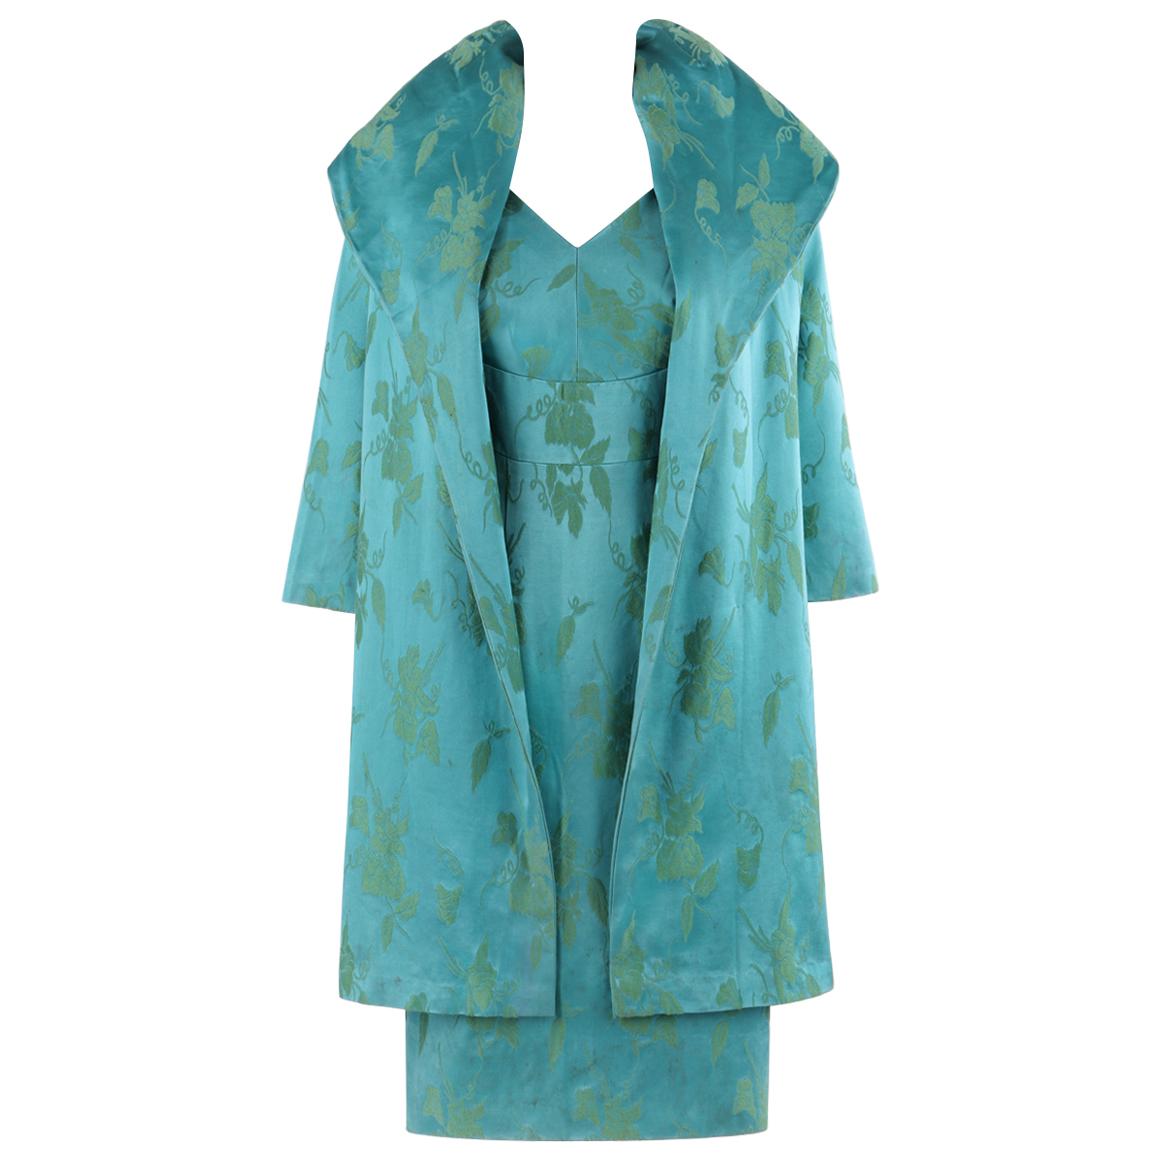 MOLLY MODES New York c.1950’s 2 Pc Blue Green Floral Silk Dress Swing Coat Set 